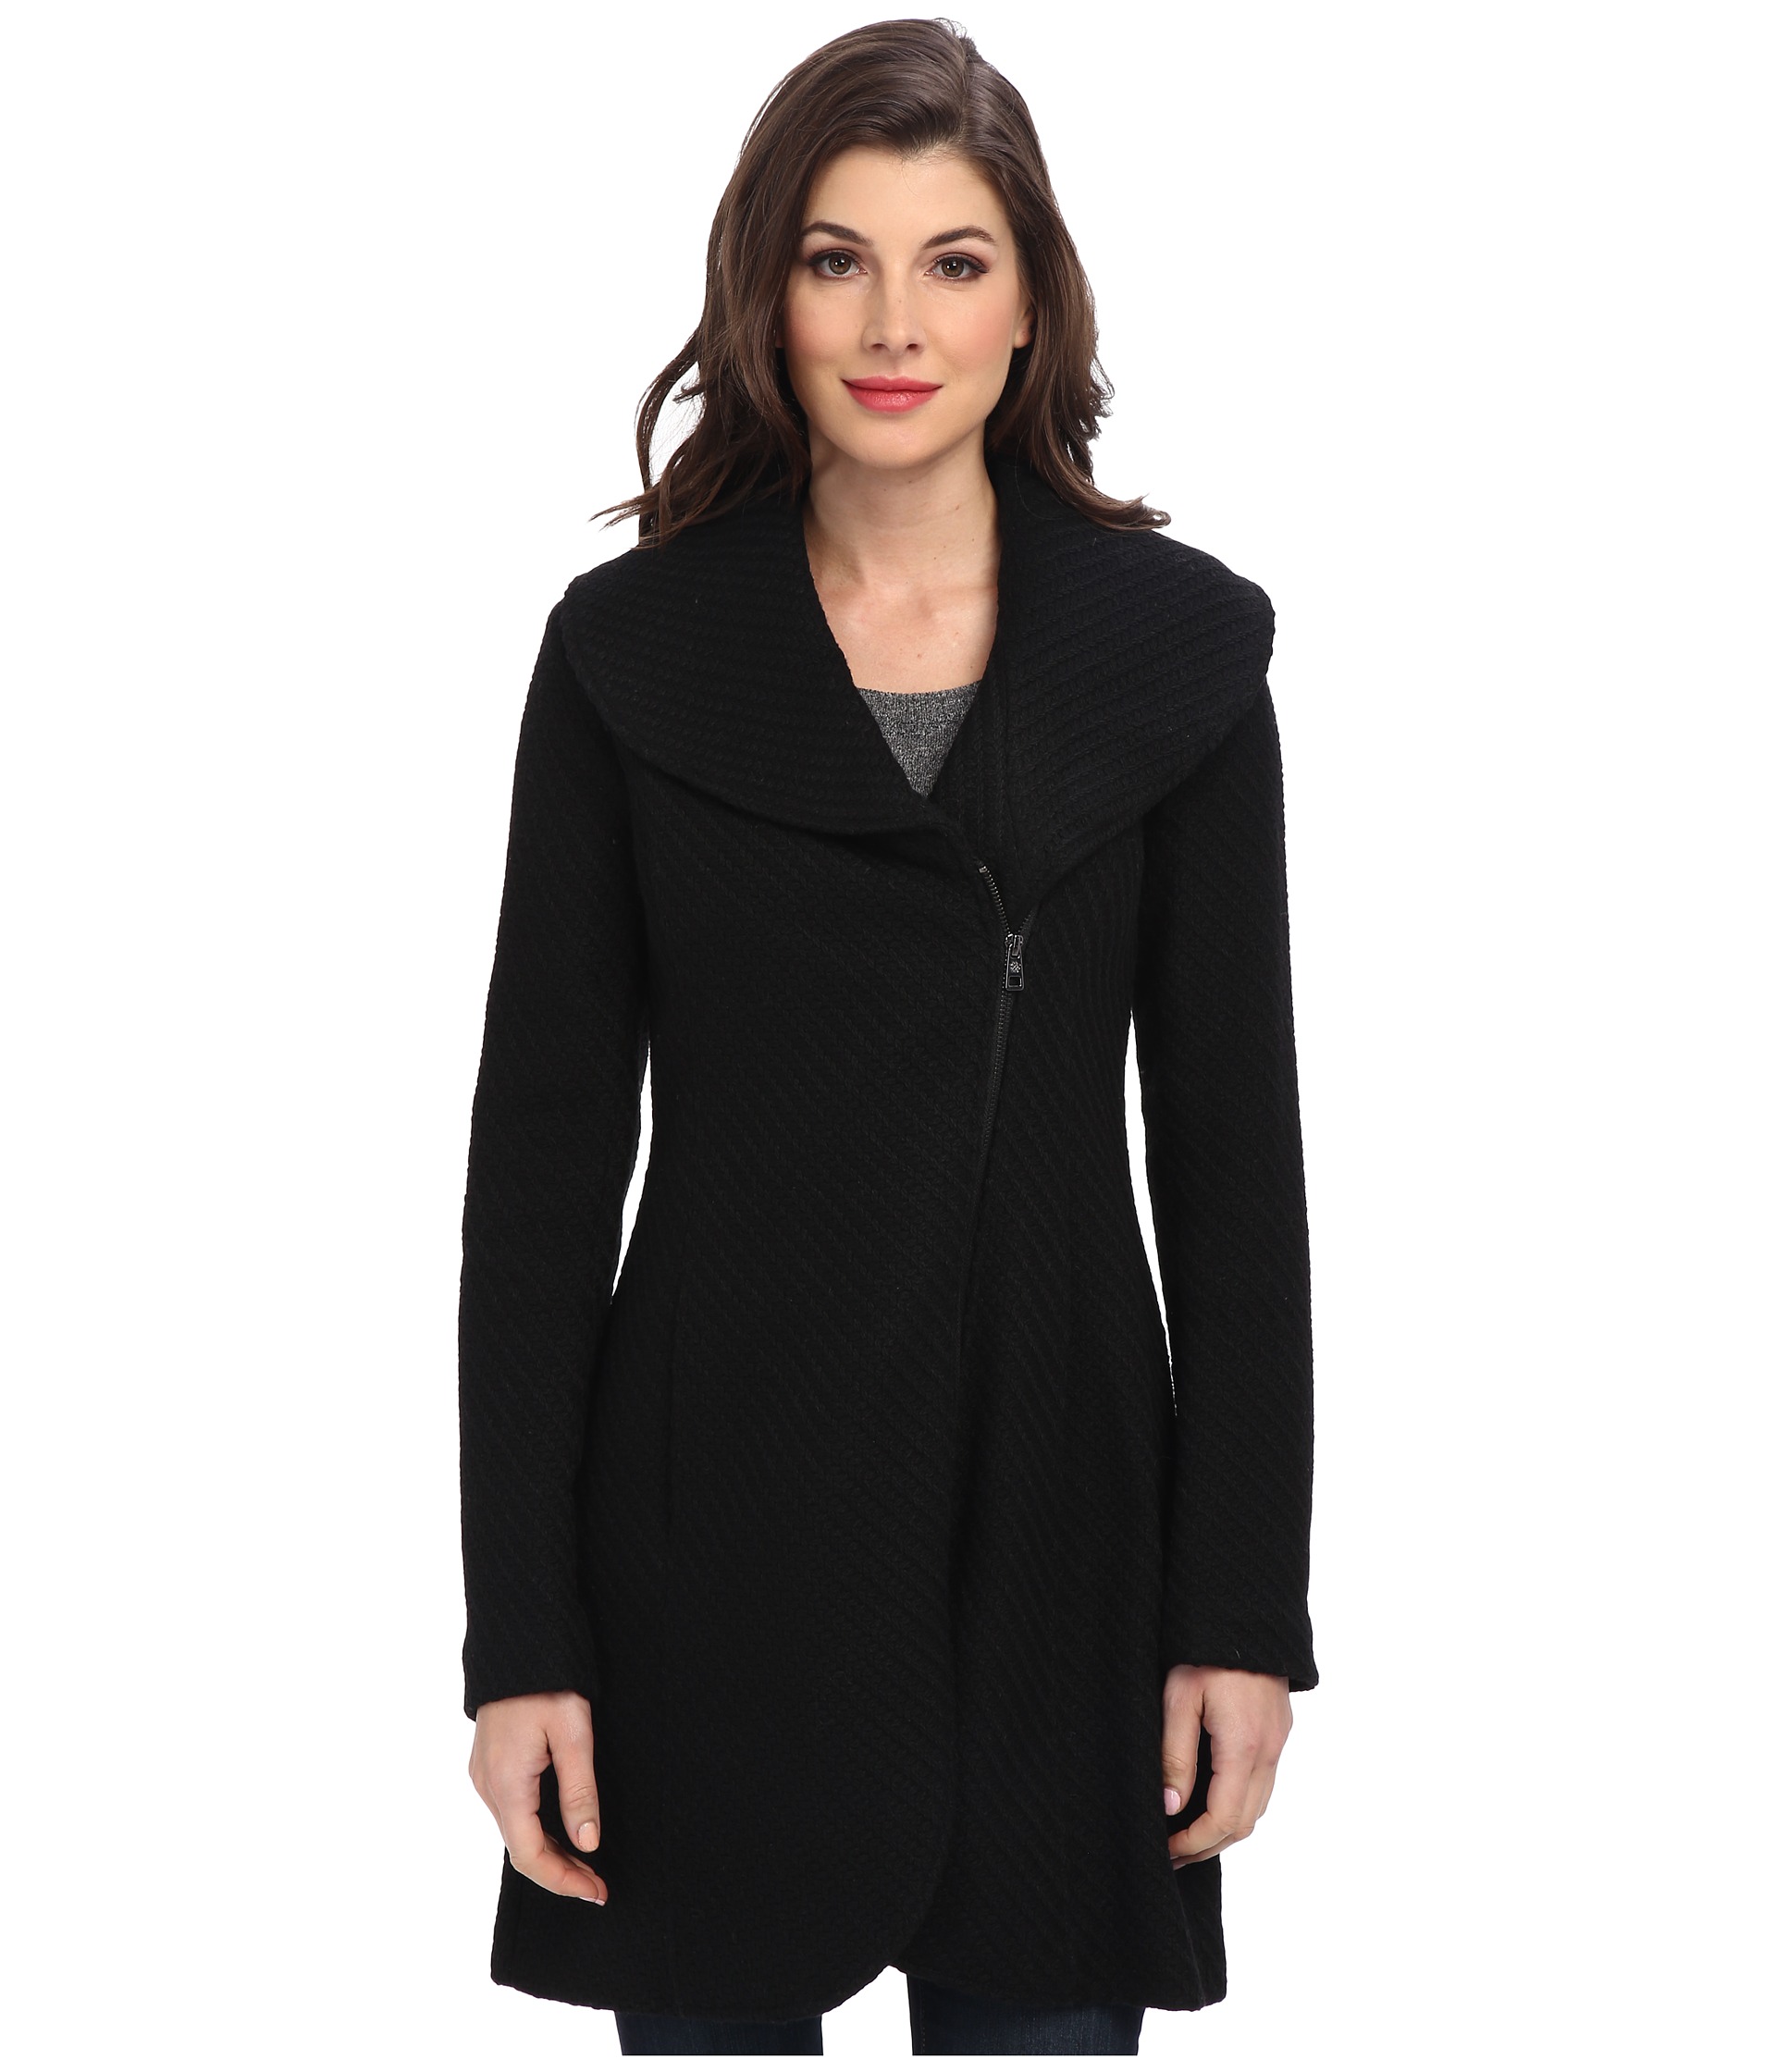 Jessica Simpson Jofmh840 Coat Black, Women | Shipped Free at Zappos1920 x 2240